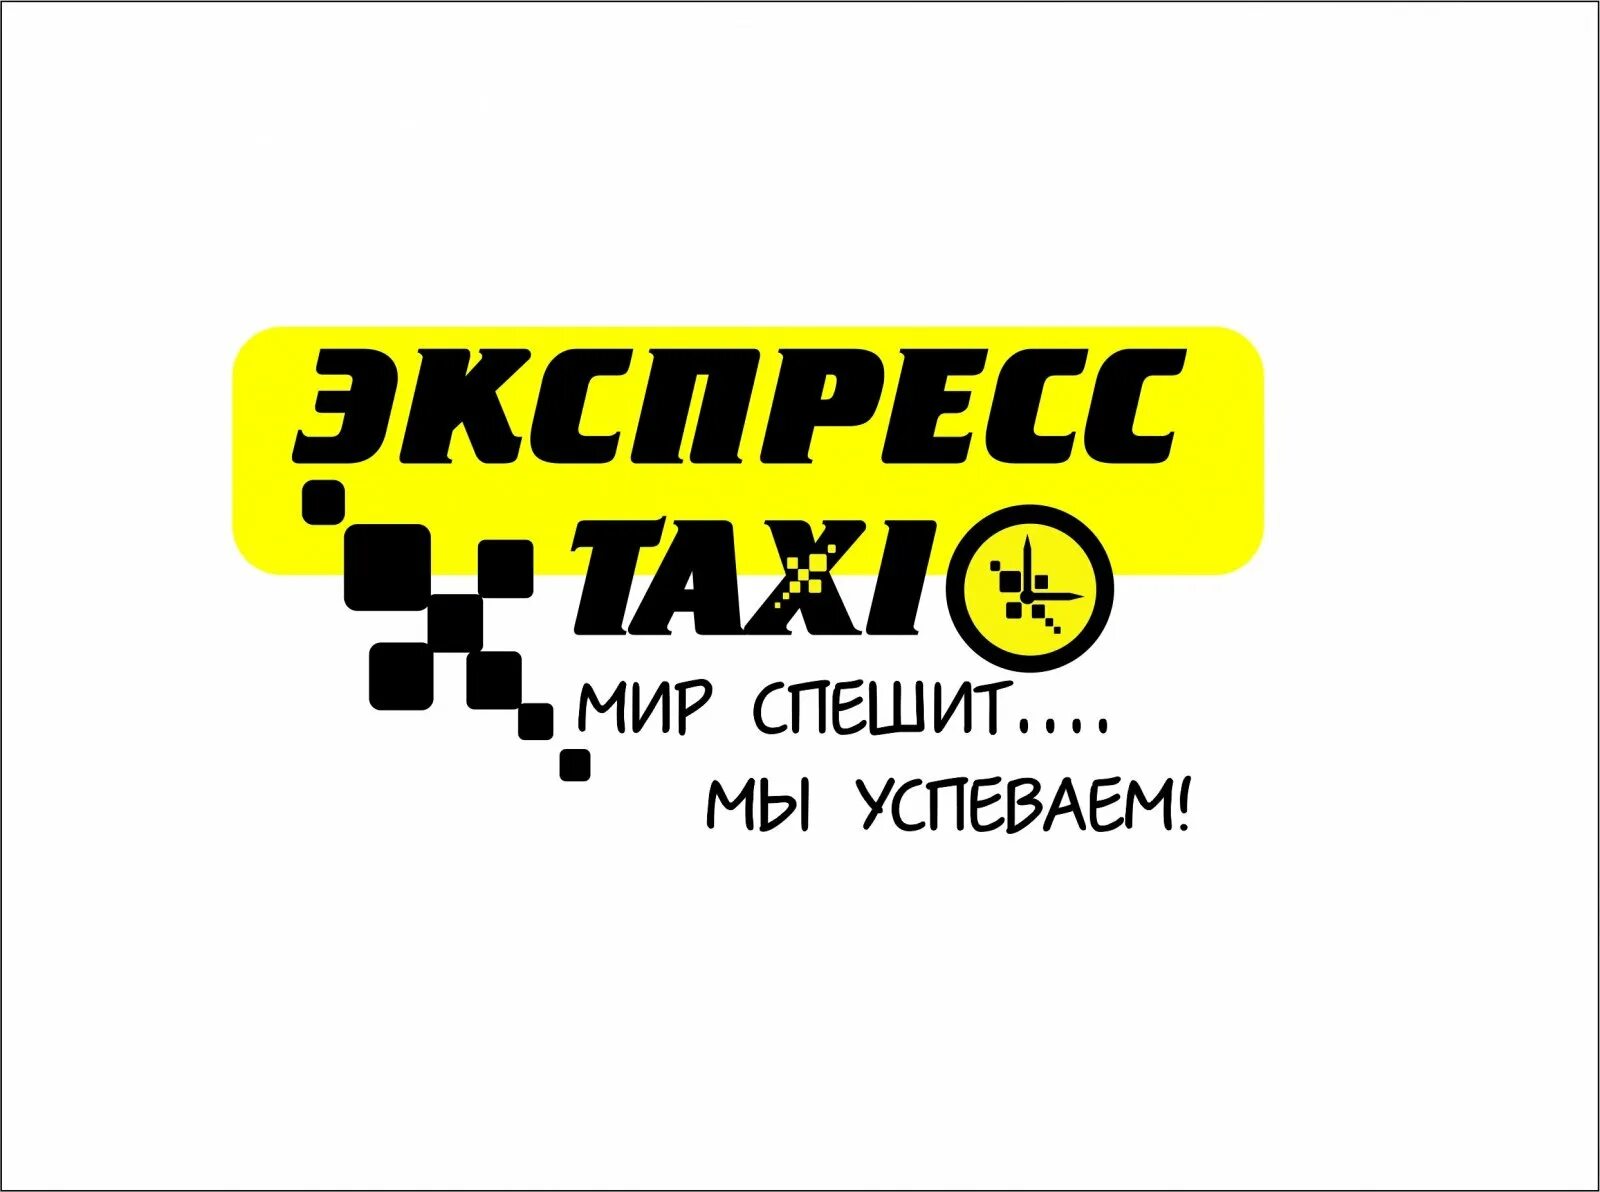 Такси экспресс. Такси надпись. Логотип такси. Аватарка такси.